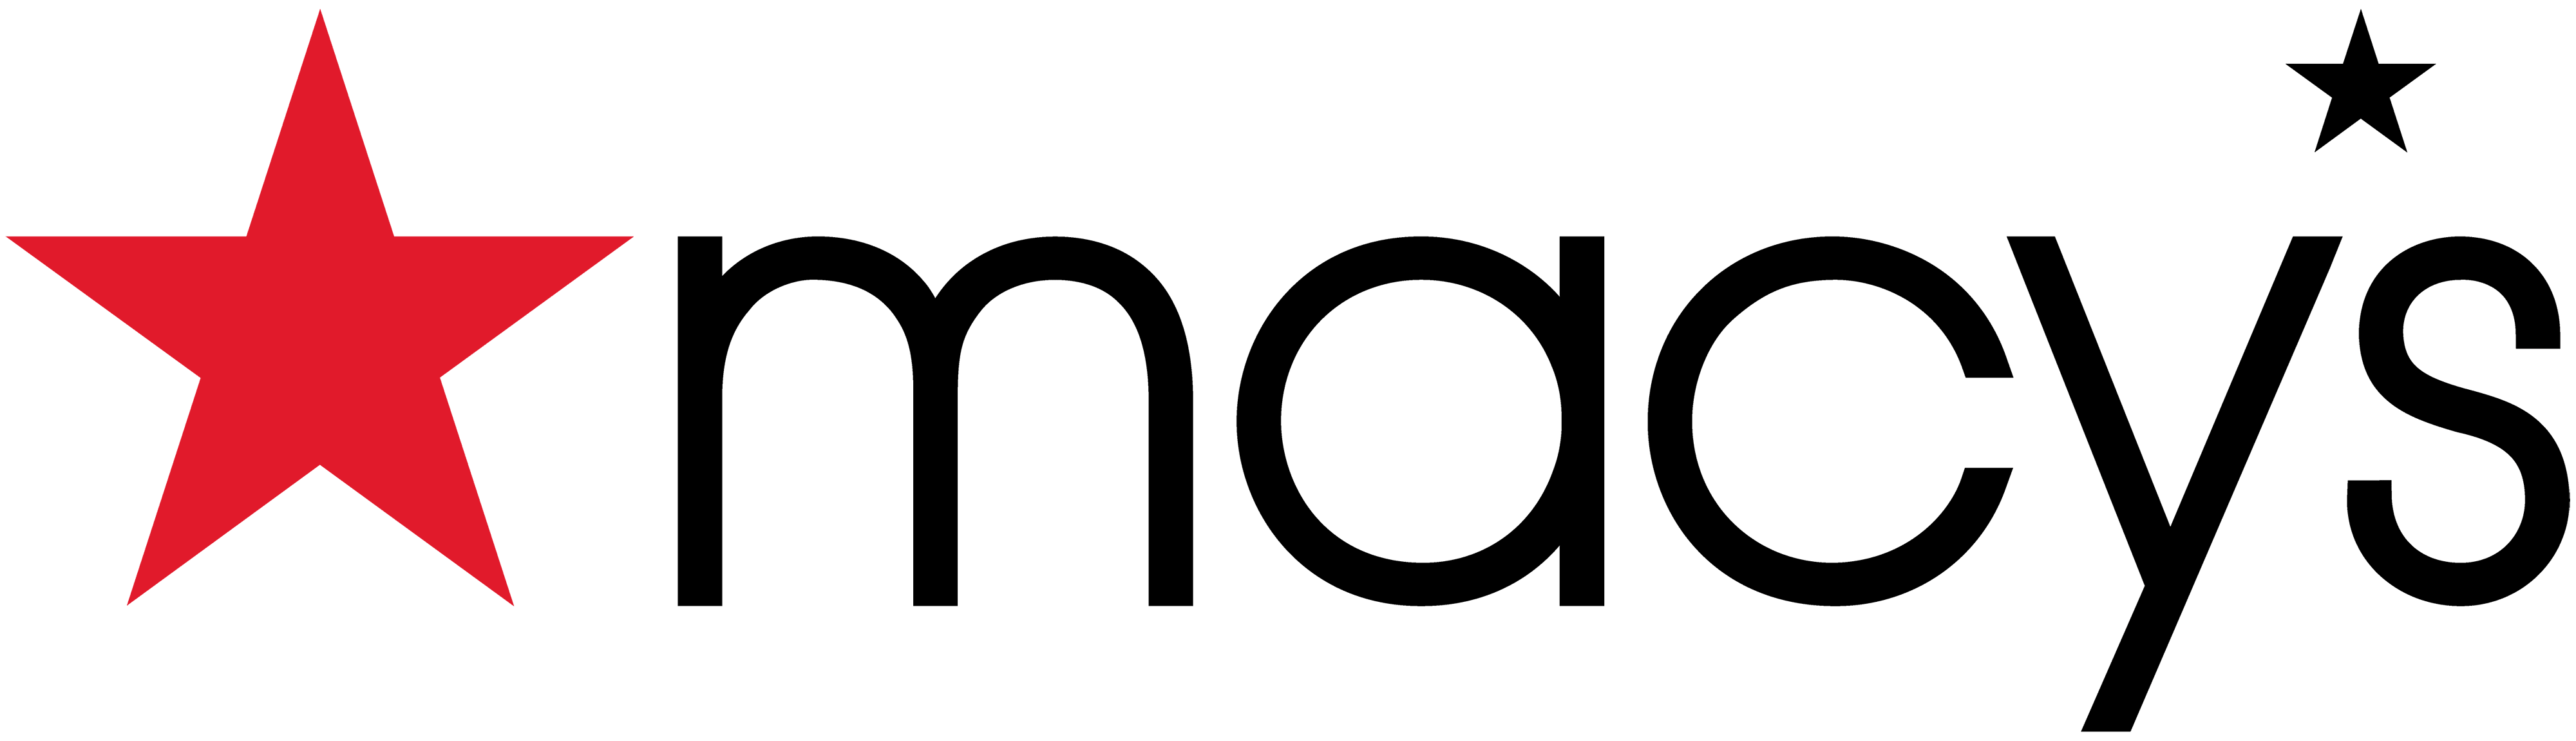 Macys-logo